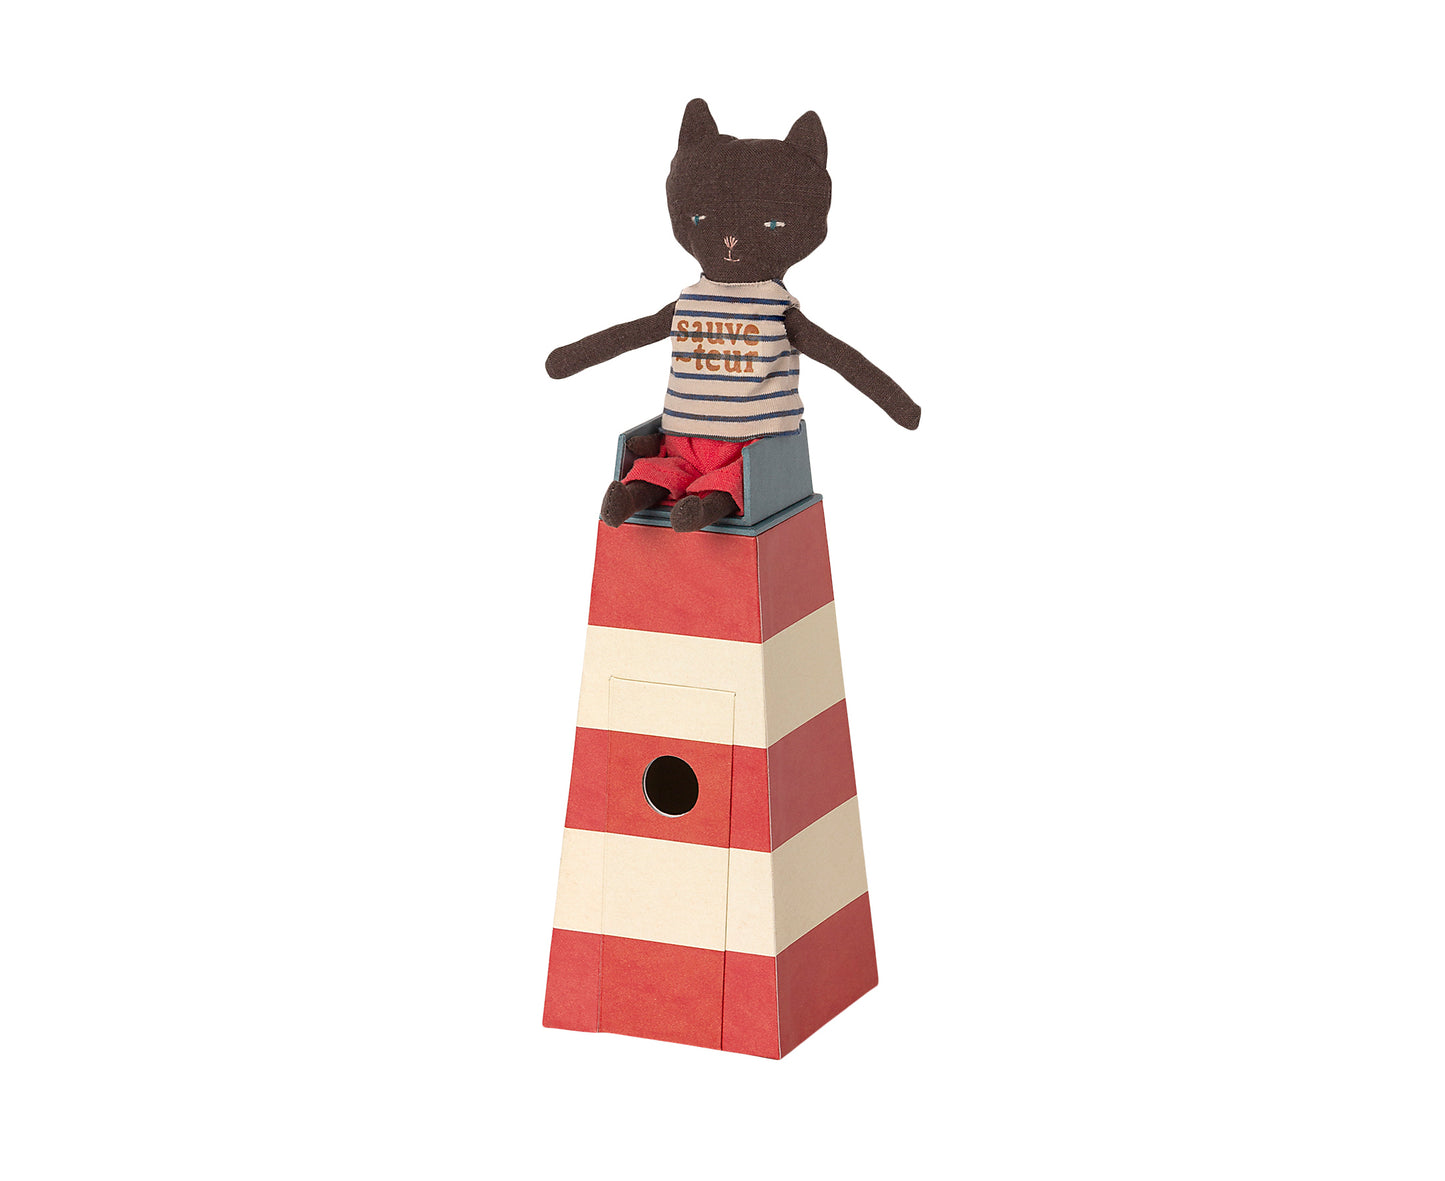 Sauveteur, Tower with Cat